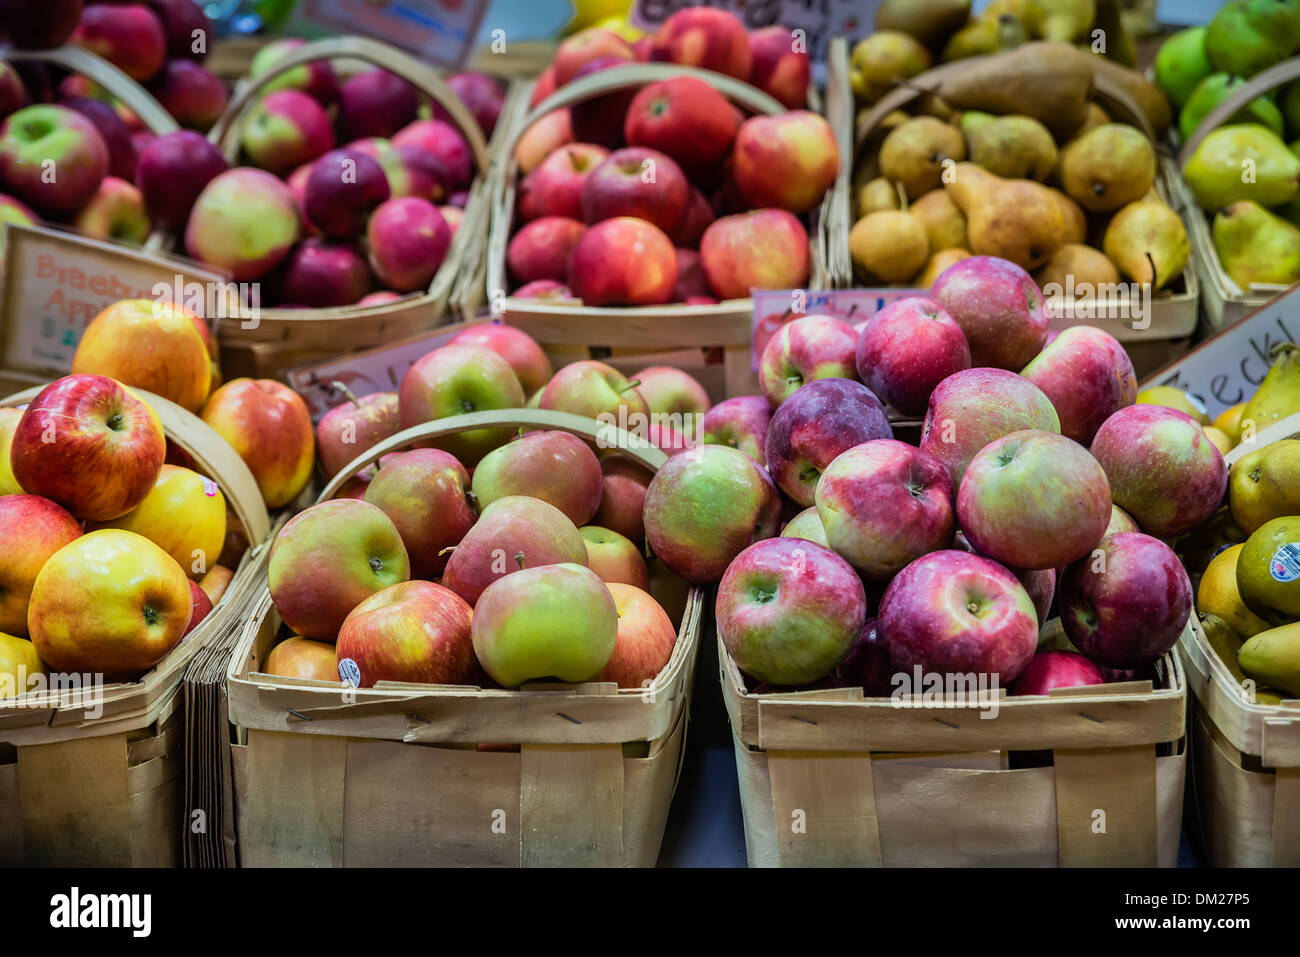 Varieties of fresh organic apples at a farmers market. Stock Photo